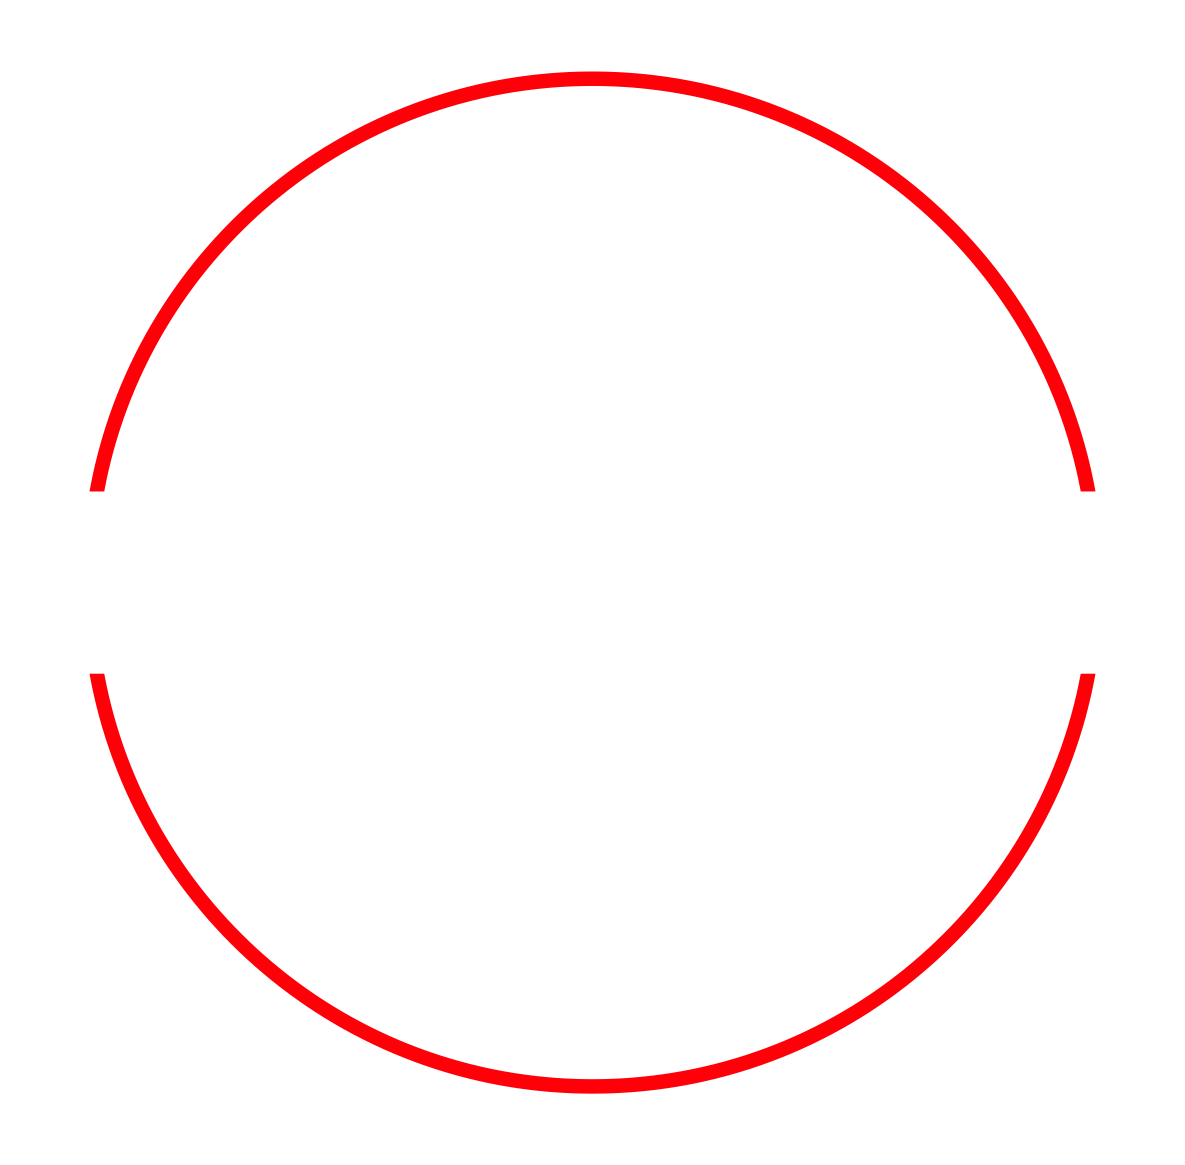 Du Eder Hamburgueria - Unidades